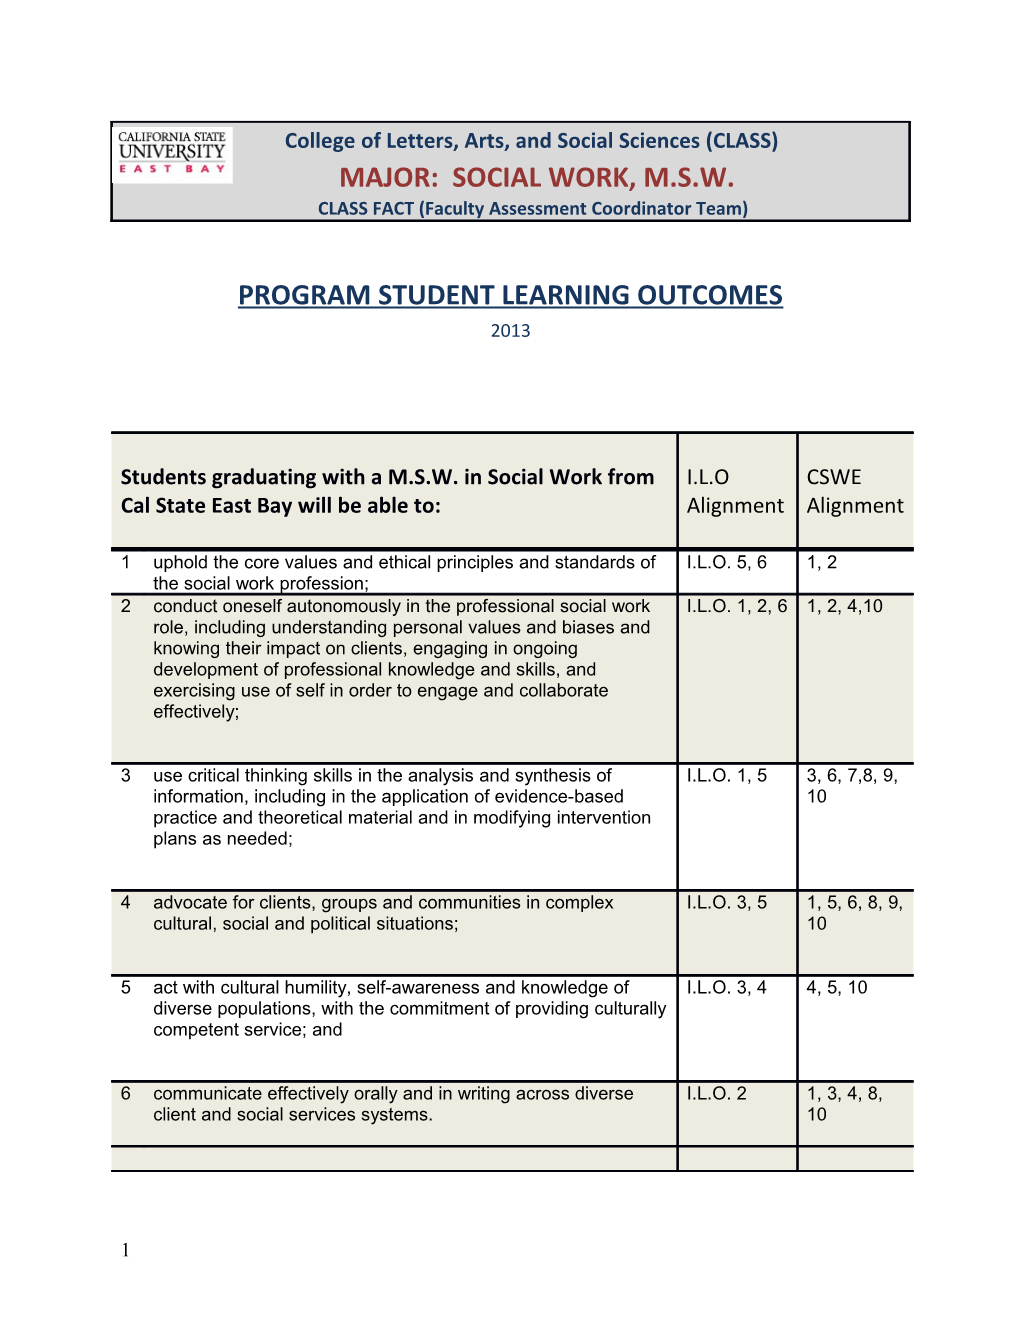 Competencies, Slo & Ilo Mapping Dept. of Social Work